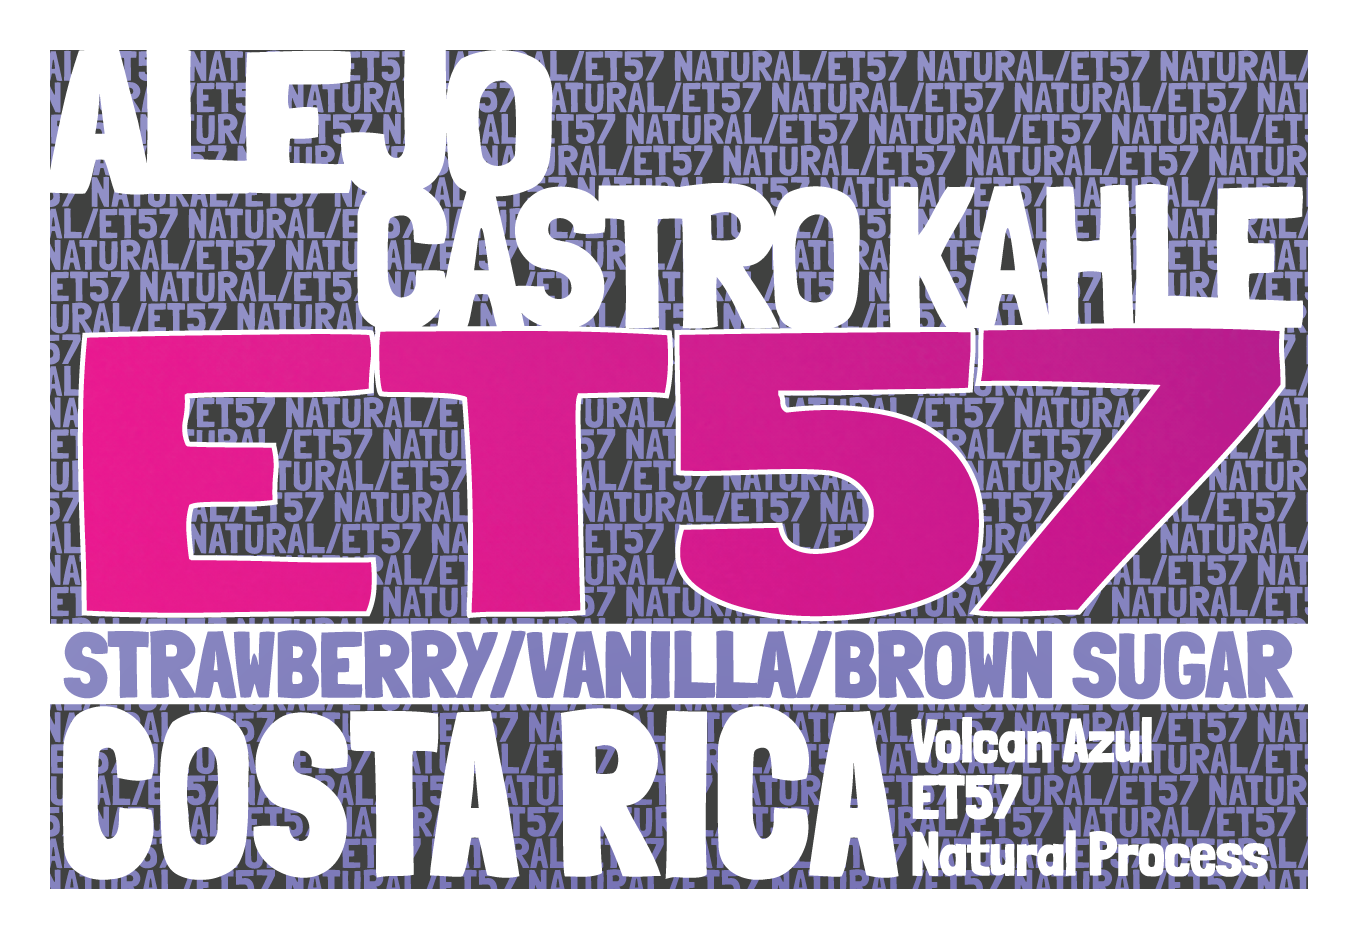 Costa Rica - Volcan Azul - ET57 - Natural Process